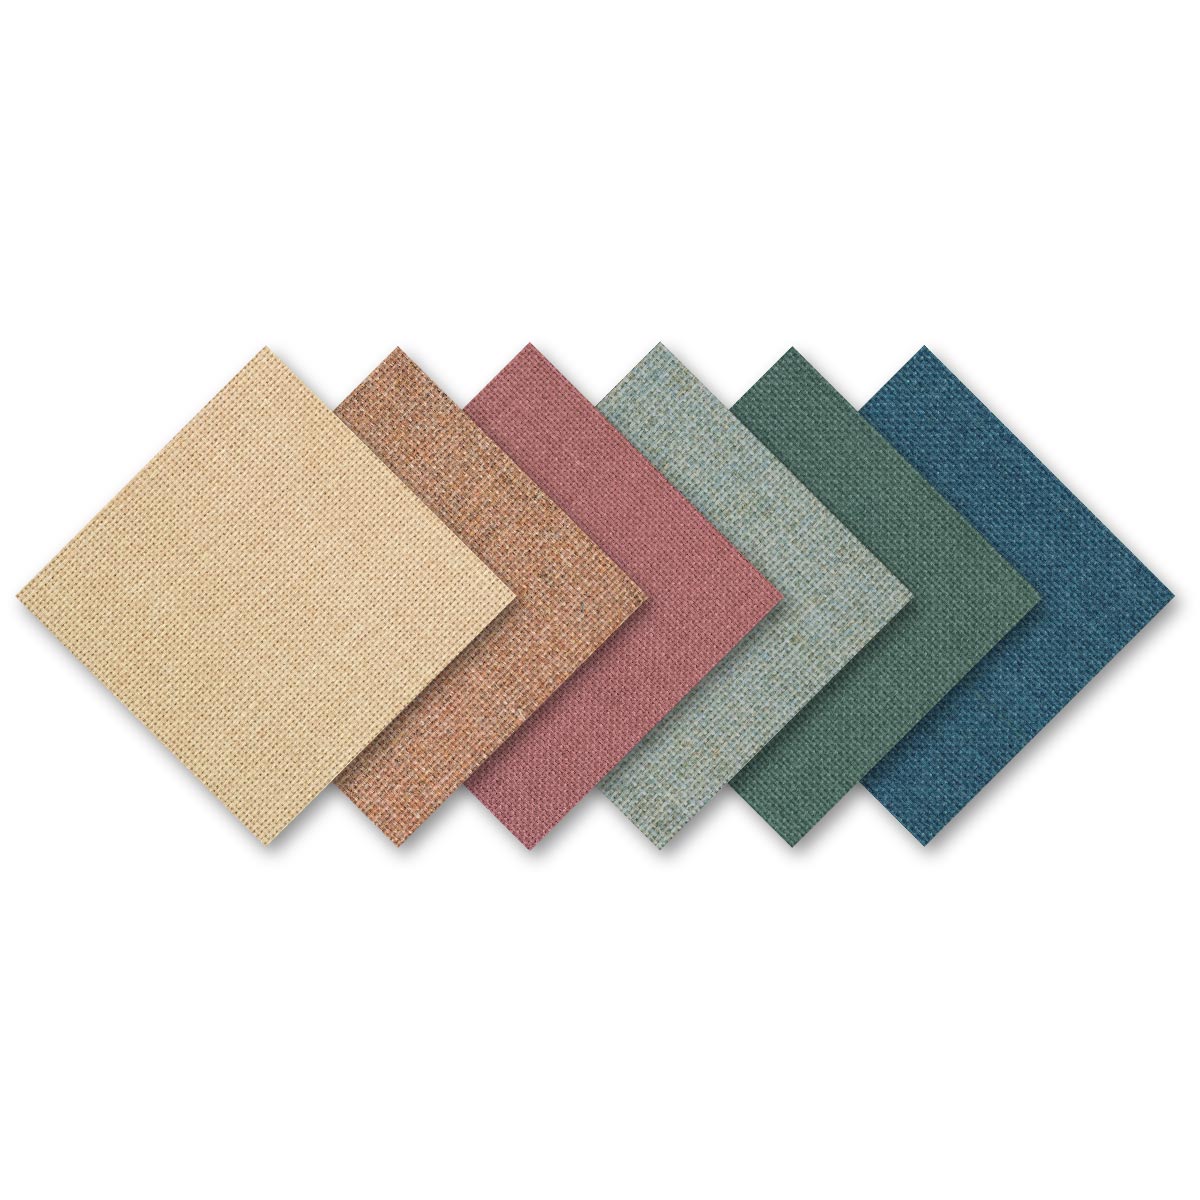 Fabric Acoustic Panels - FR701